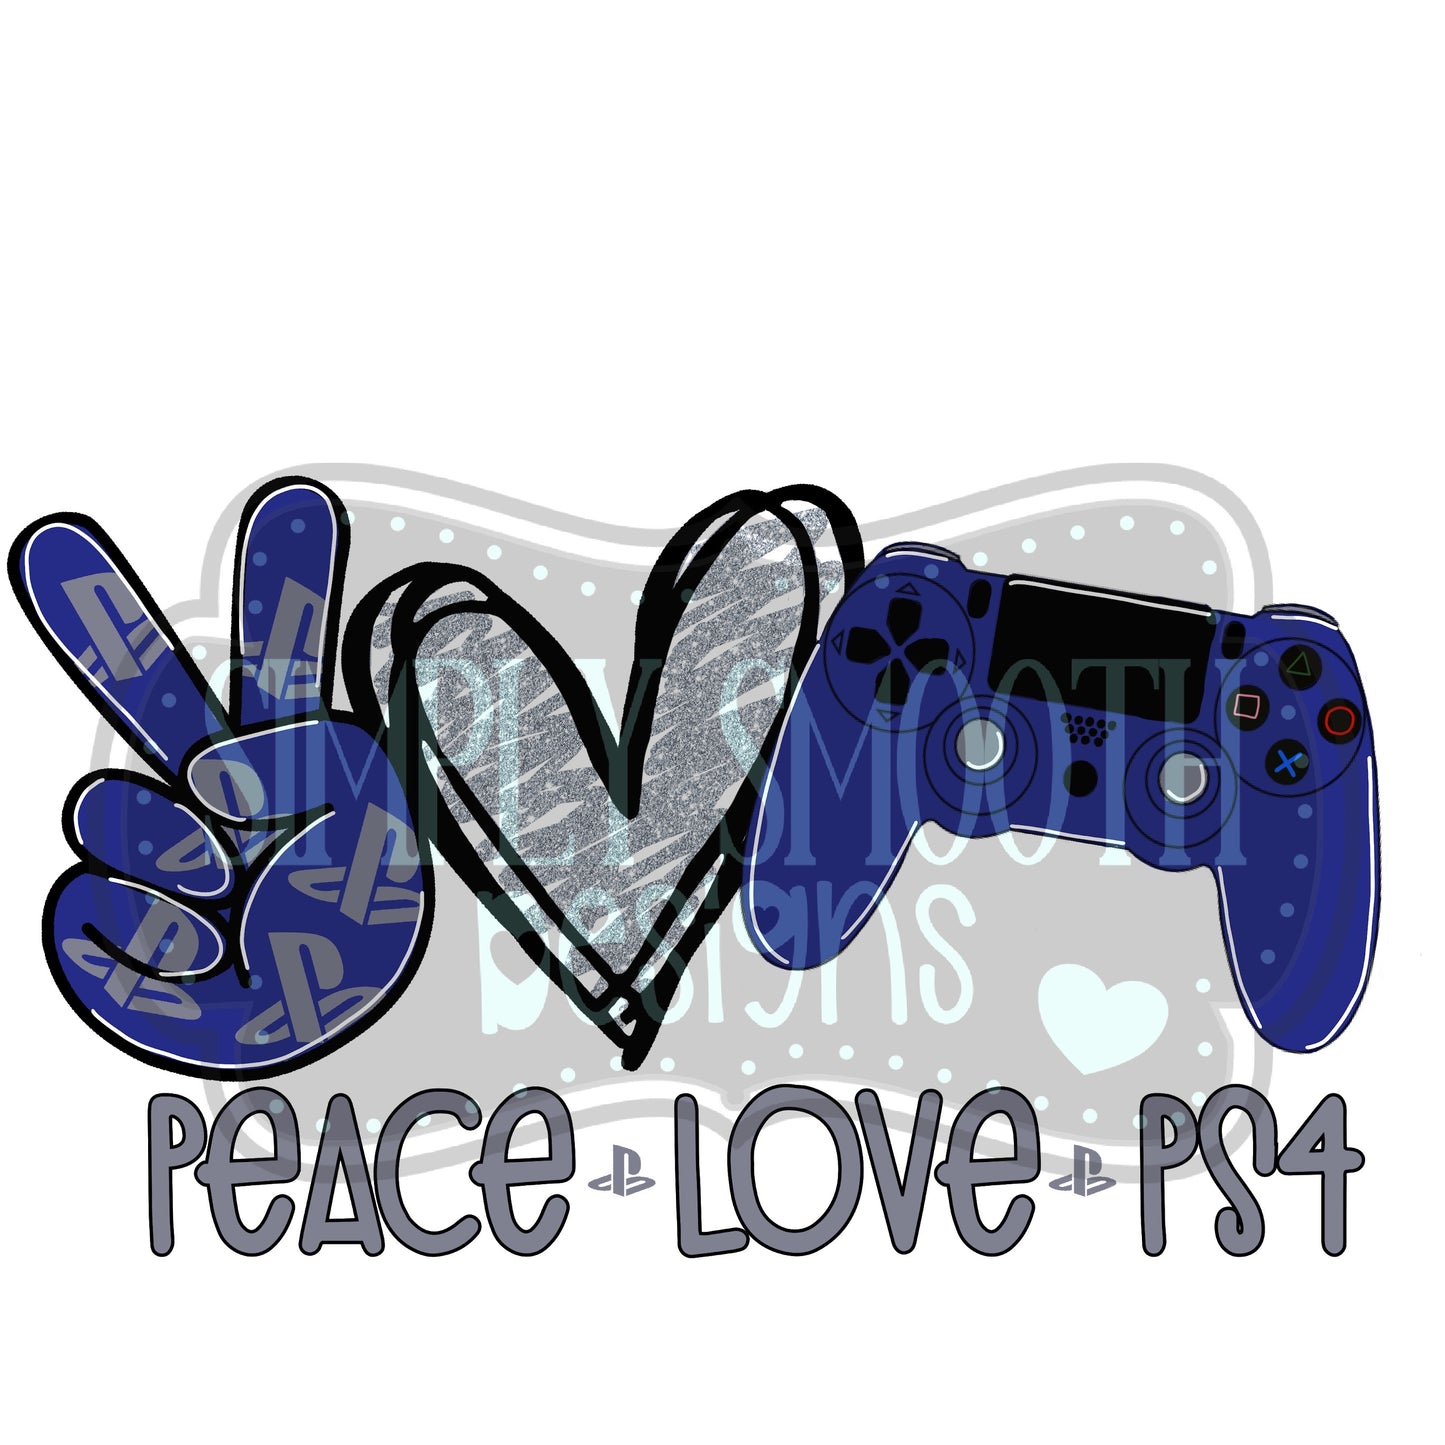 Peace love ps4